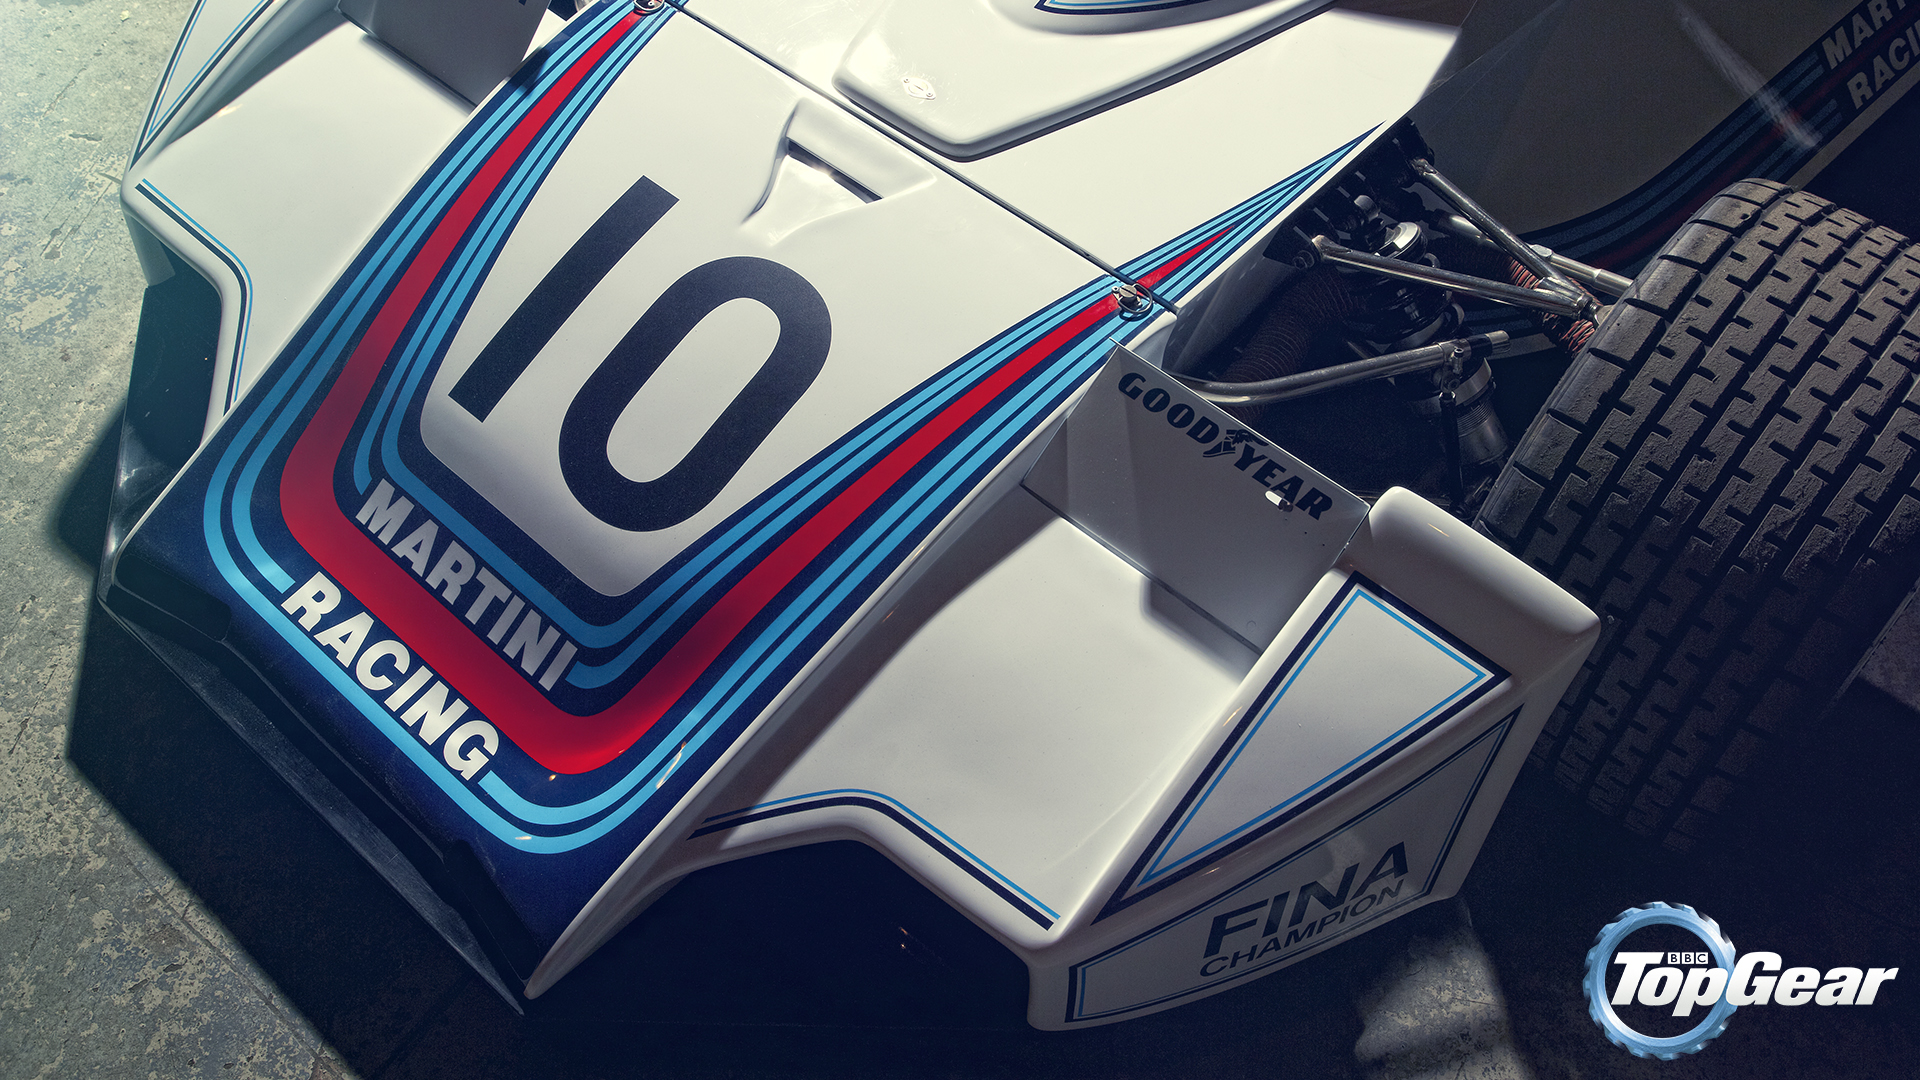 Exclusive wallpaper: Martini race cars